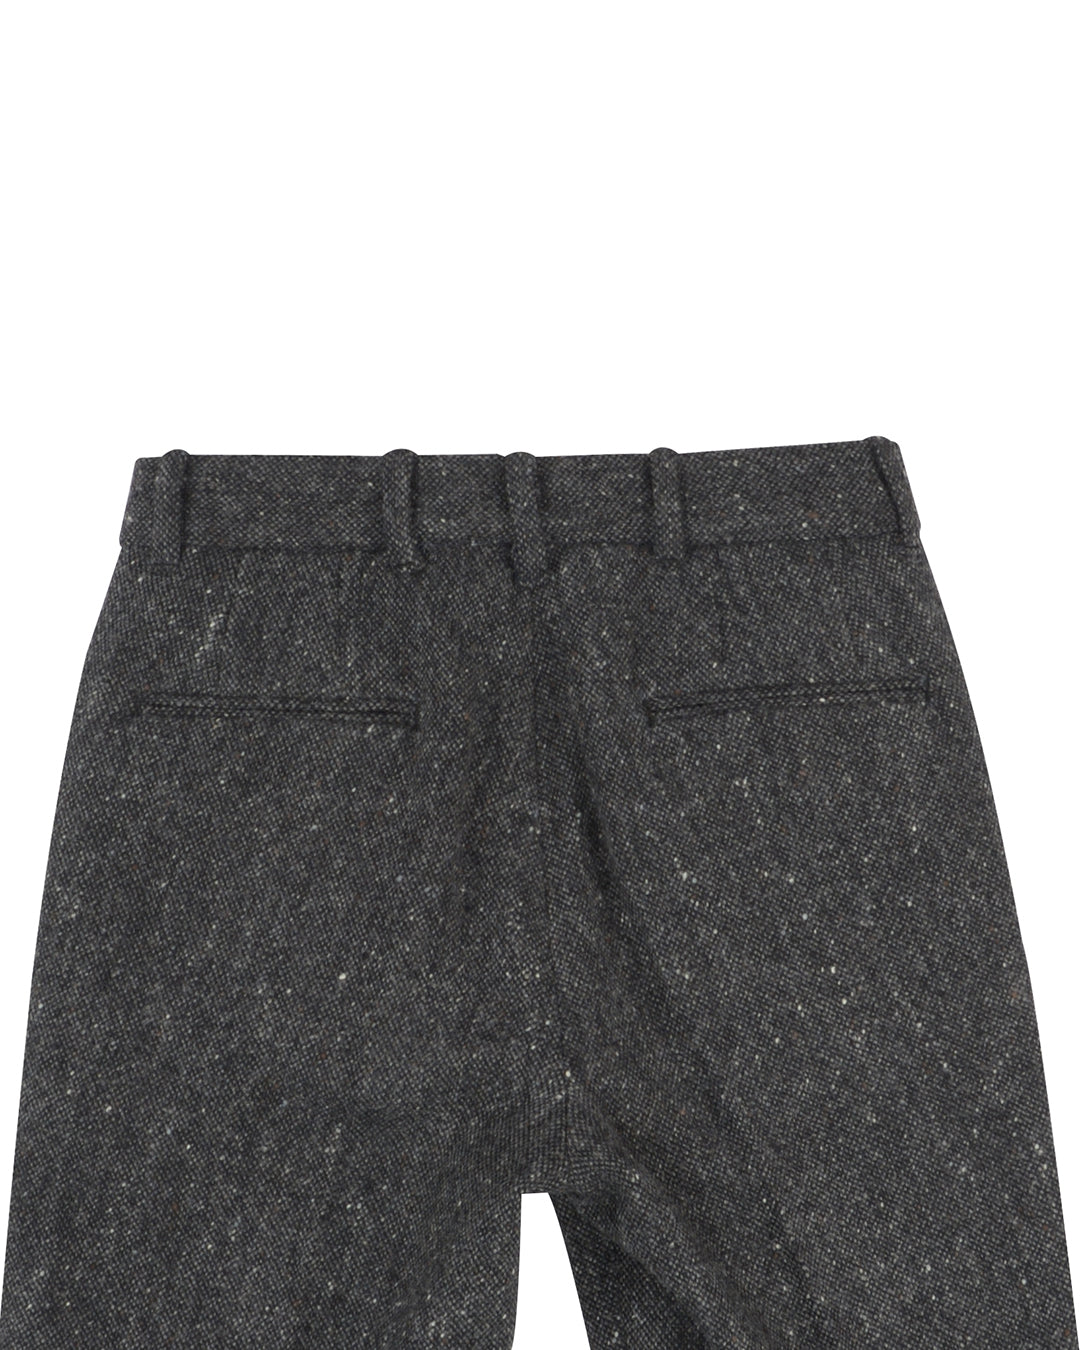 Molloy Plain Donegal Tweed Pants - Dark Grey